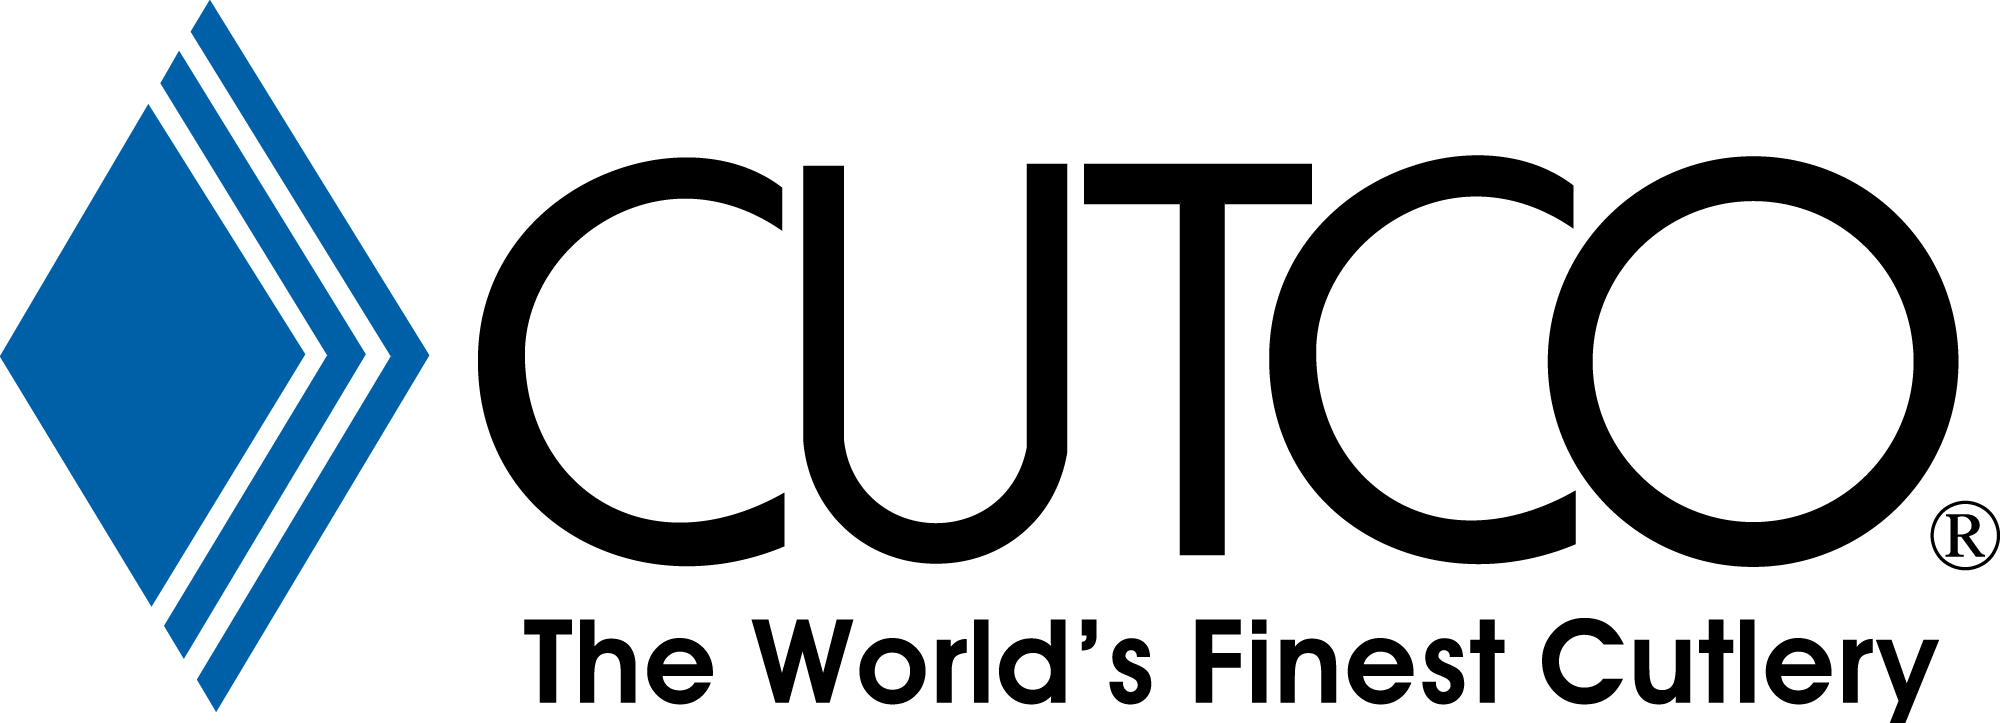 12 CUTCO Vector Logo Images